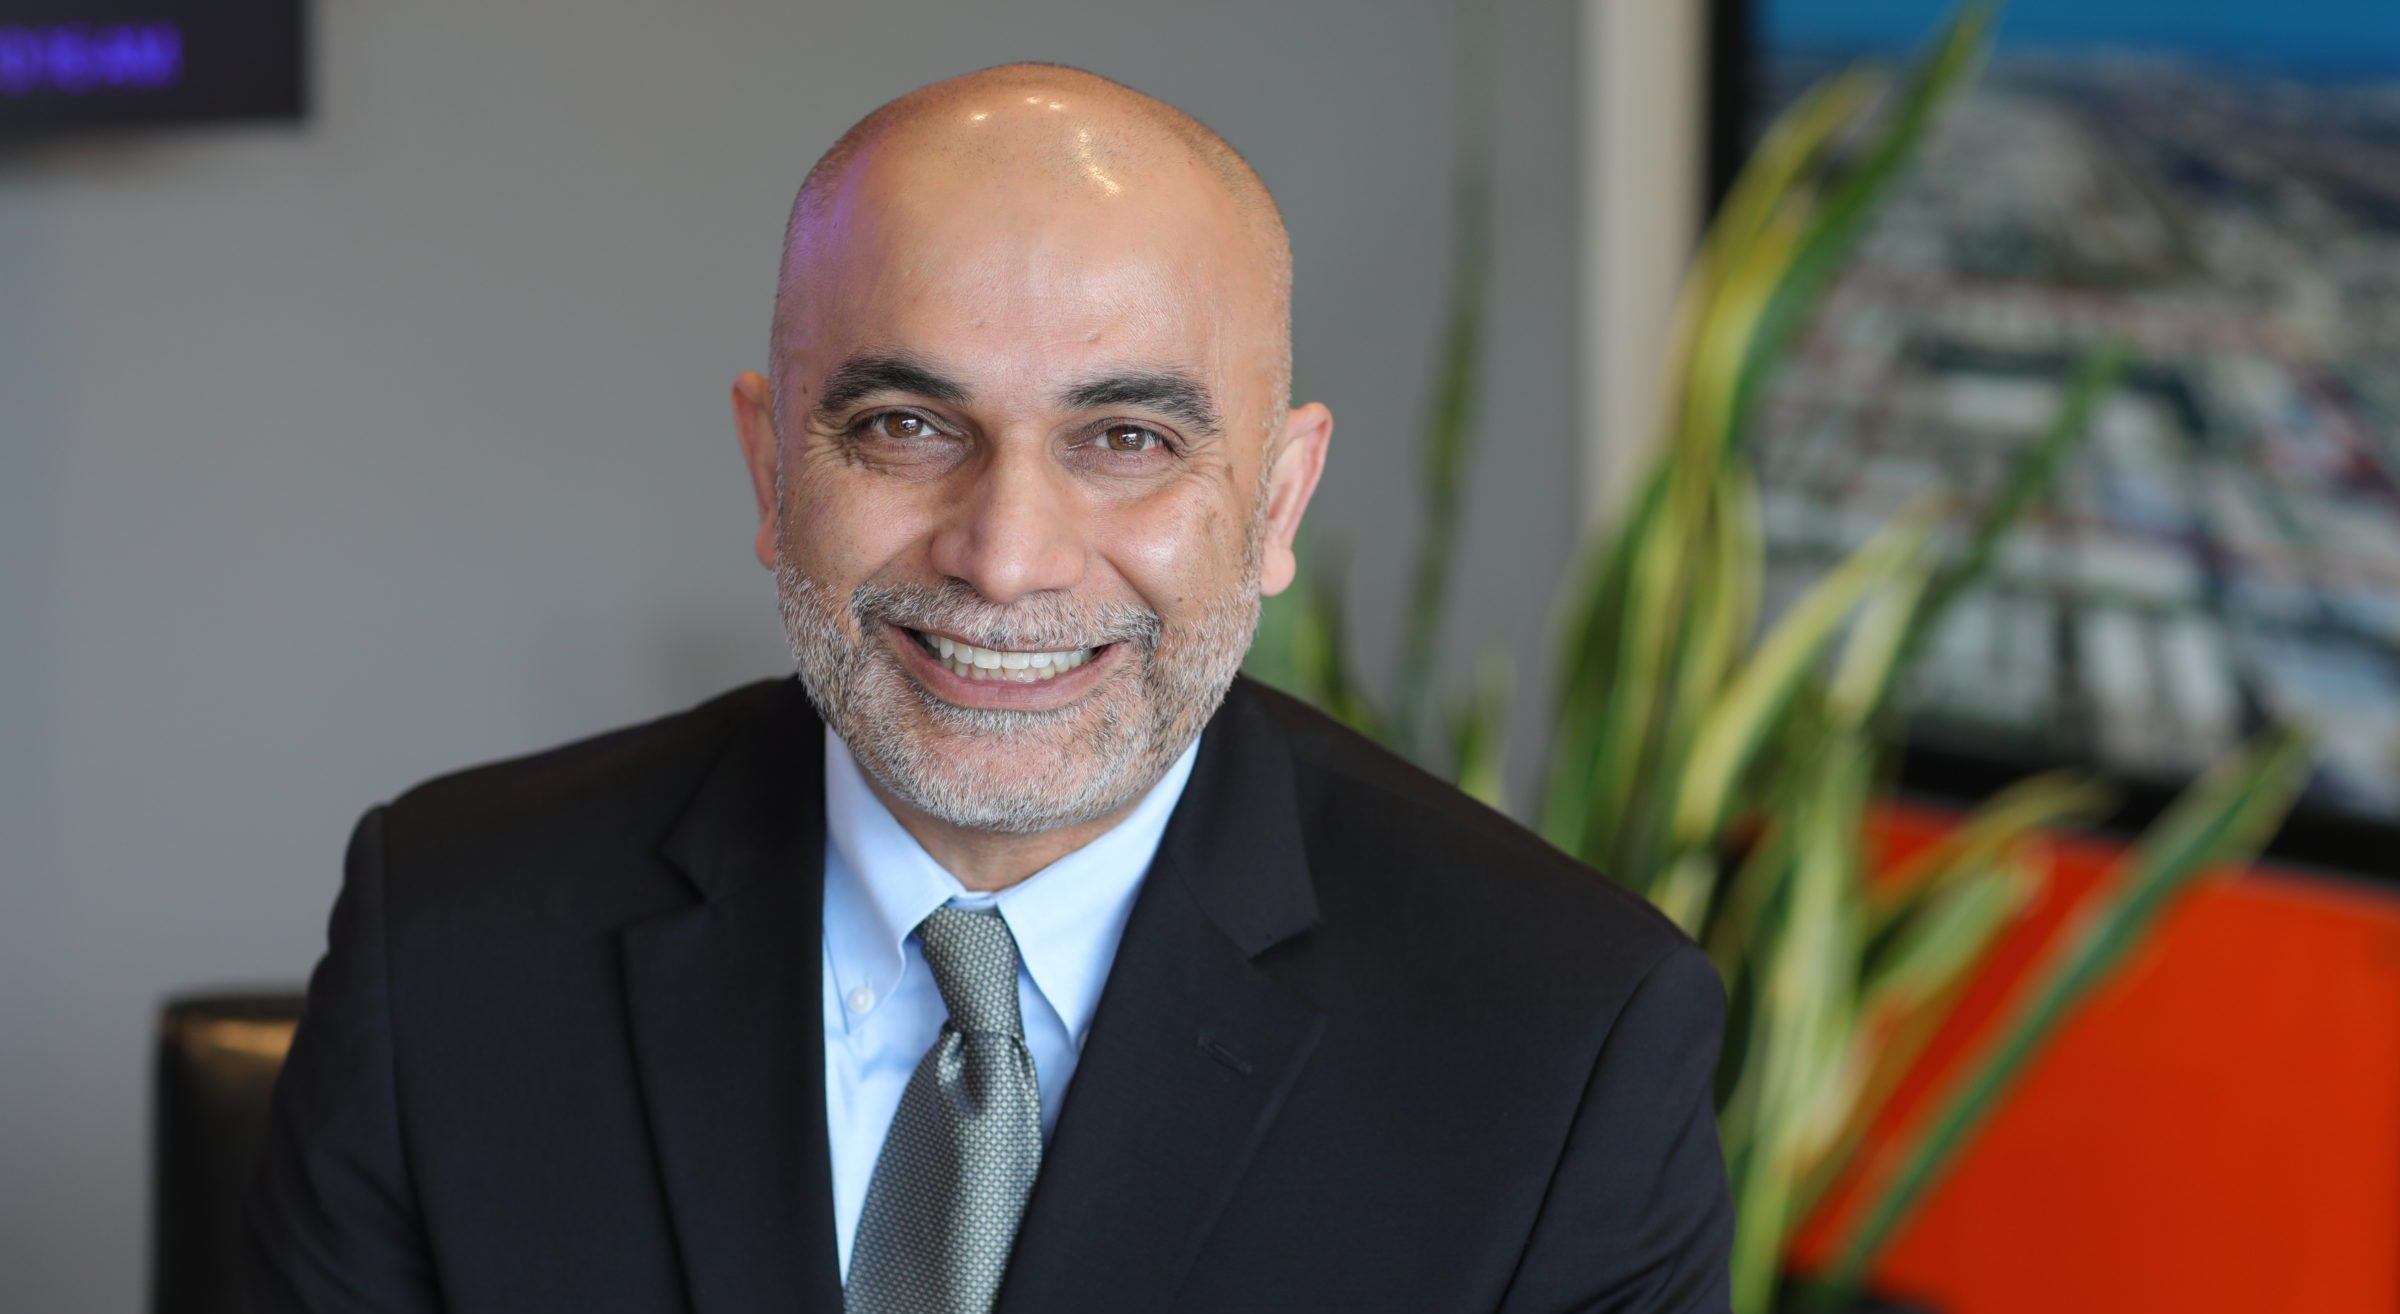 Adeel Khan, New Executive VP and CFO